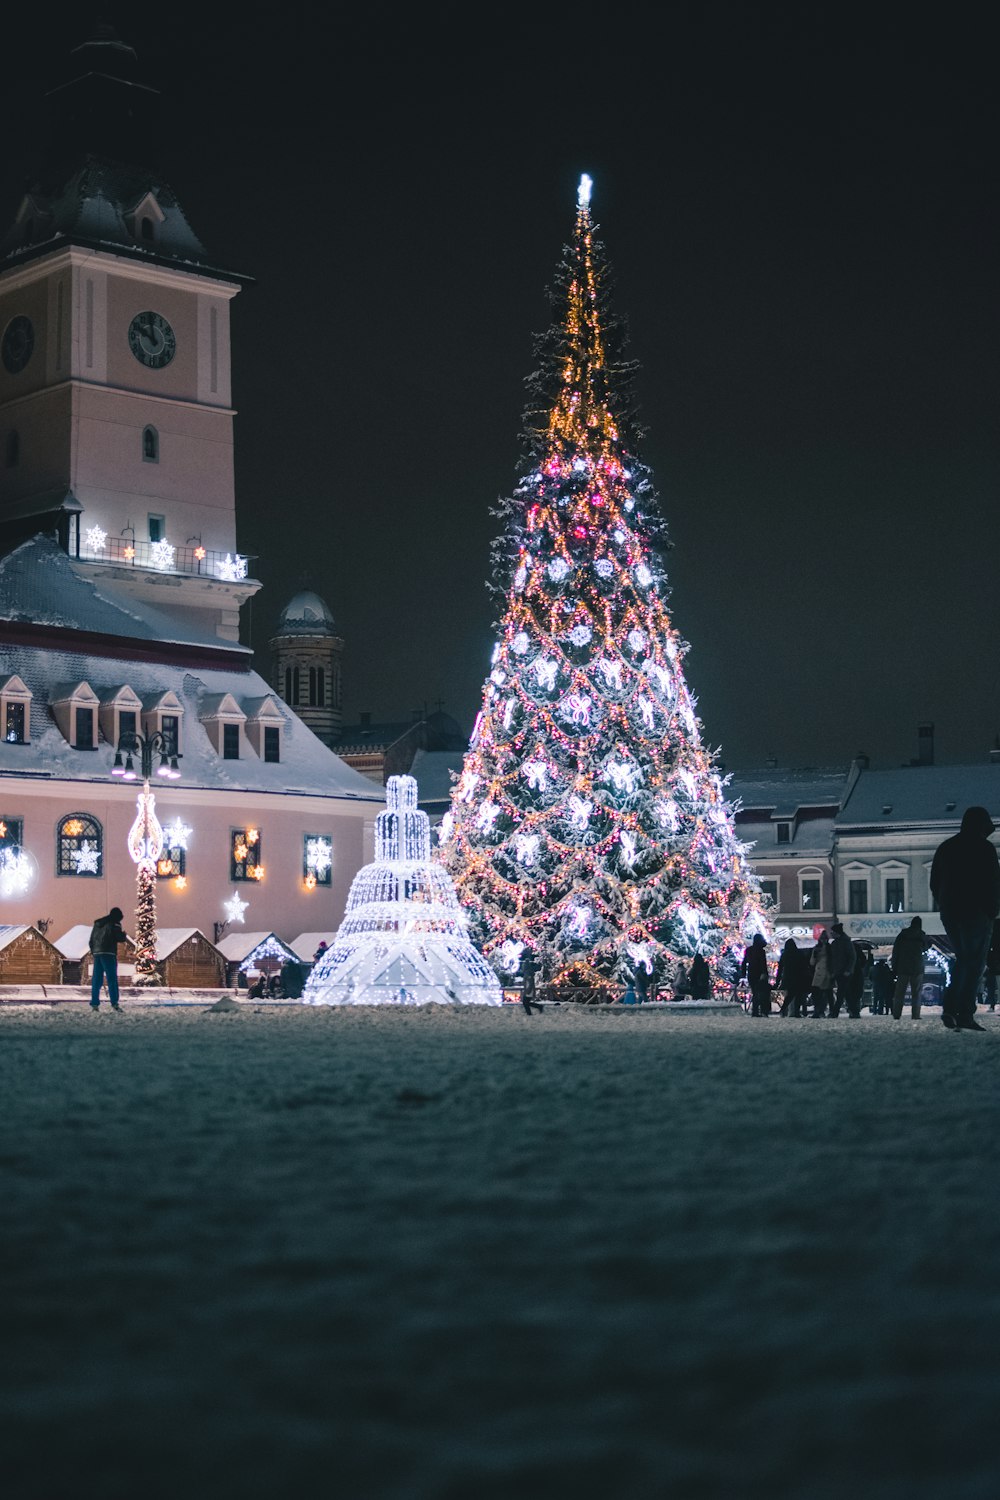 lighted giant Christmas tree